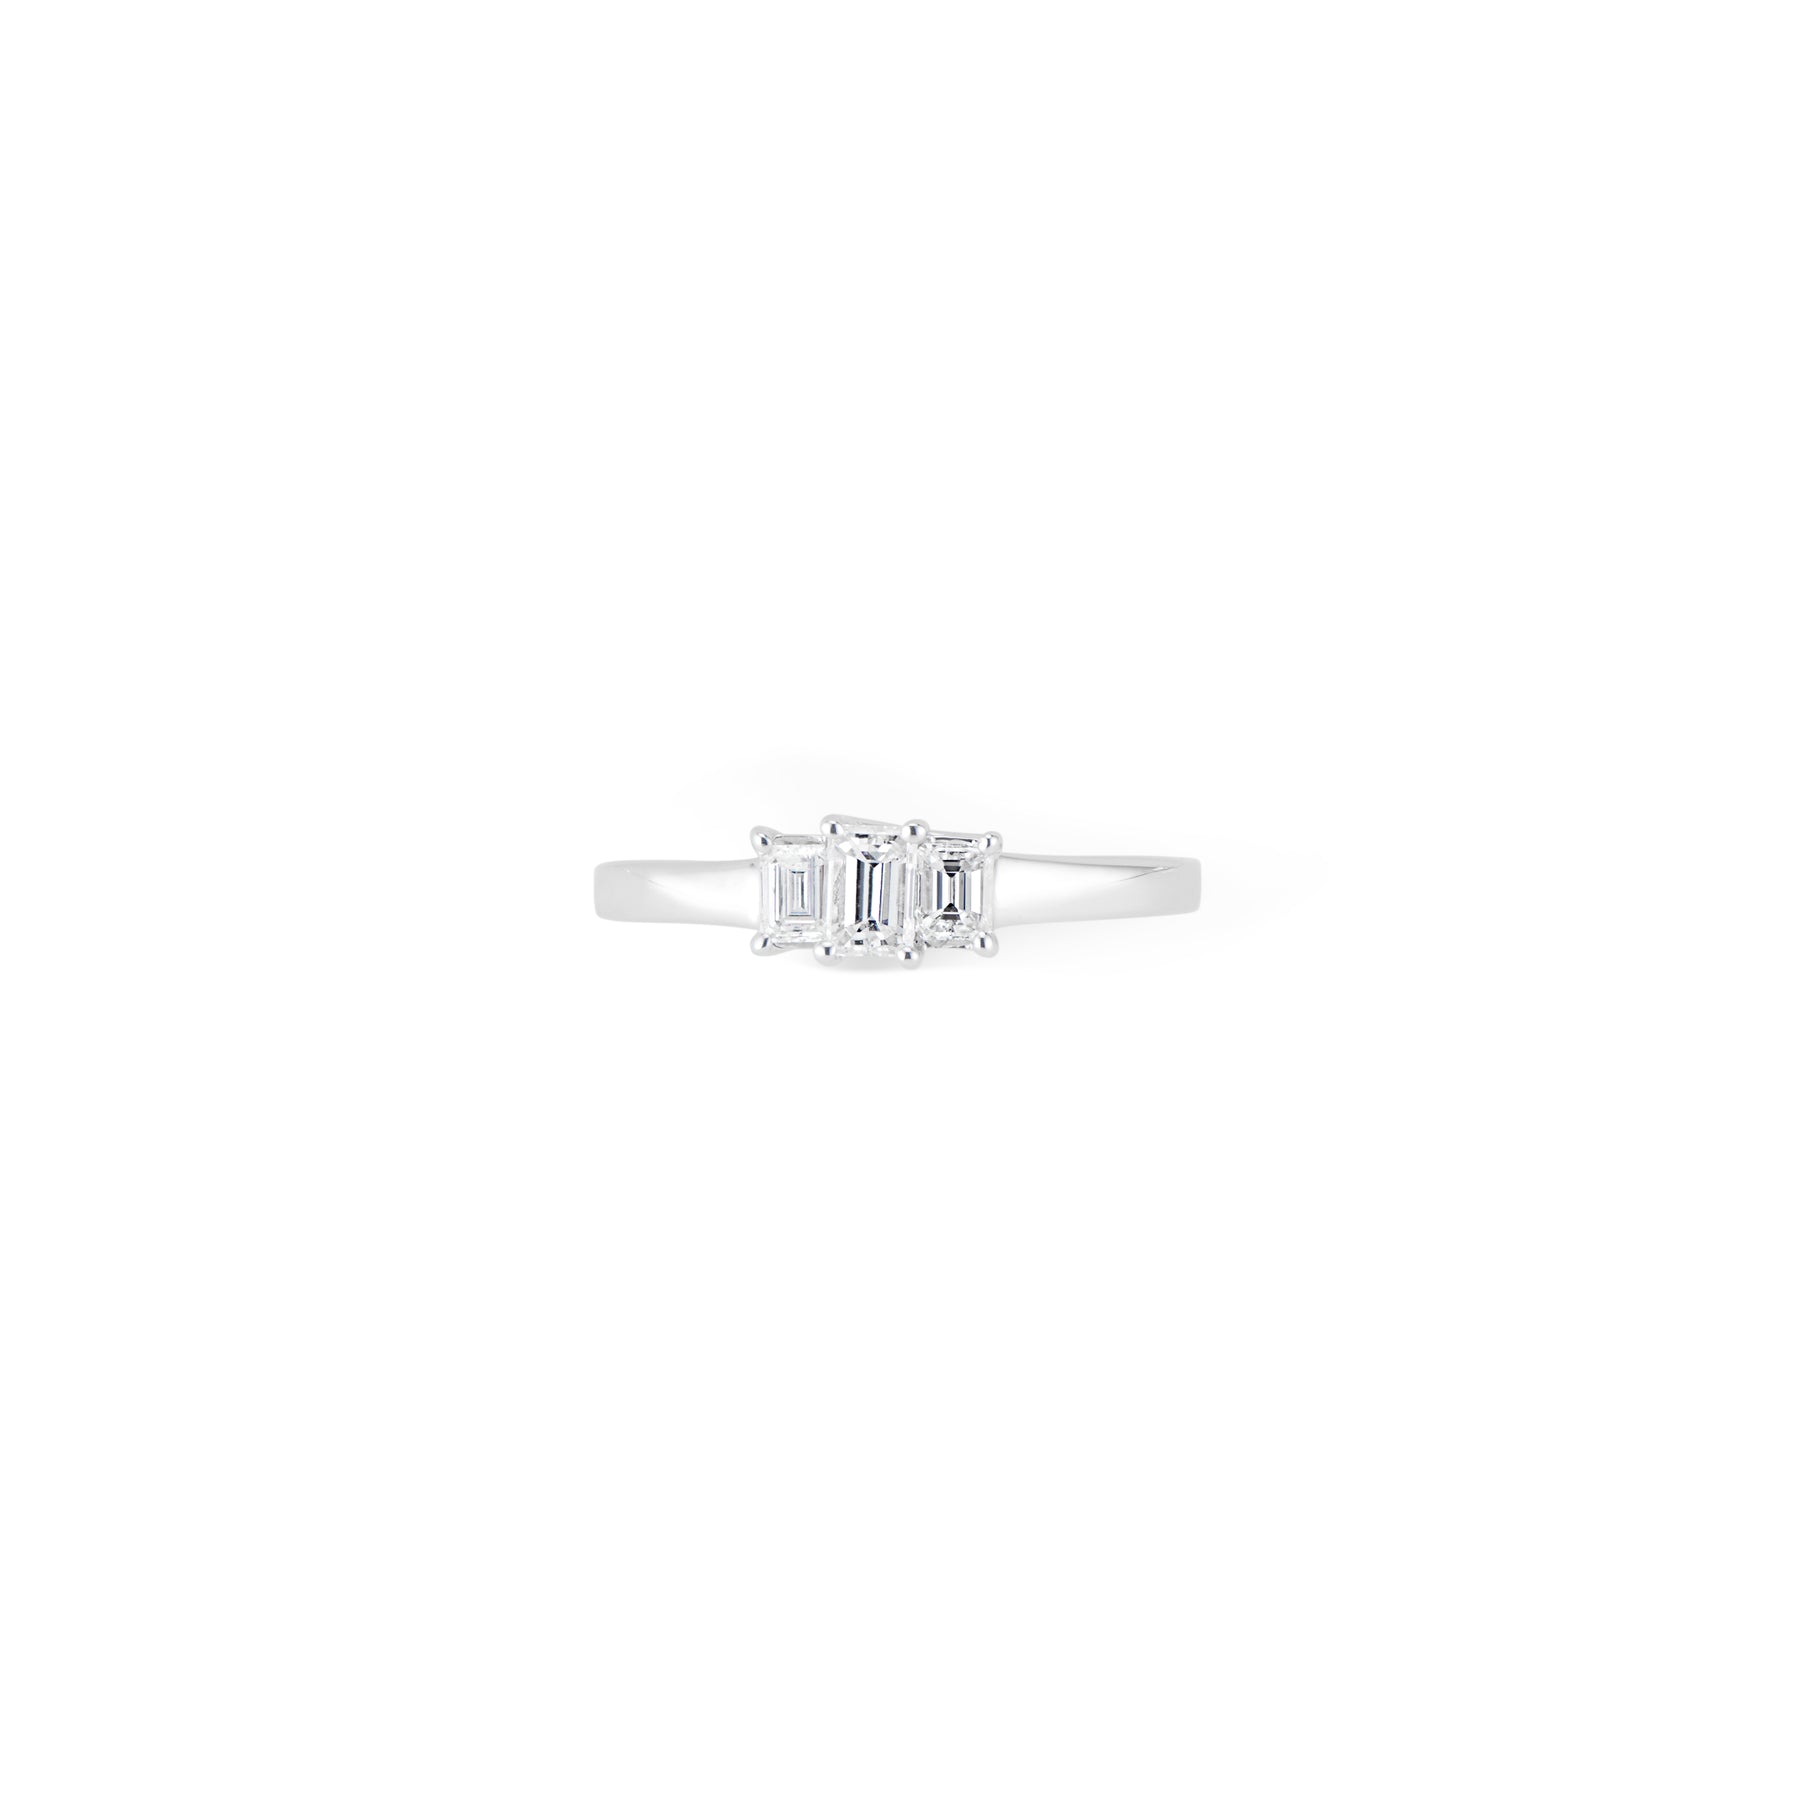 Vintage 14K White Gold 3 Stone Emerald Cut Diamond Engagement ring